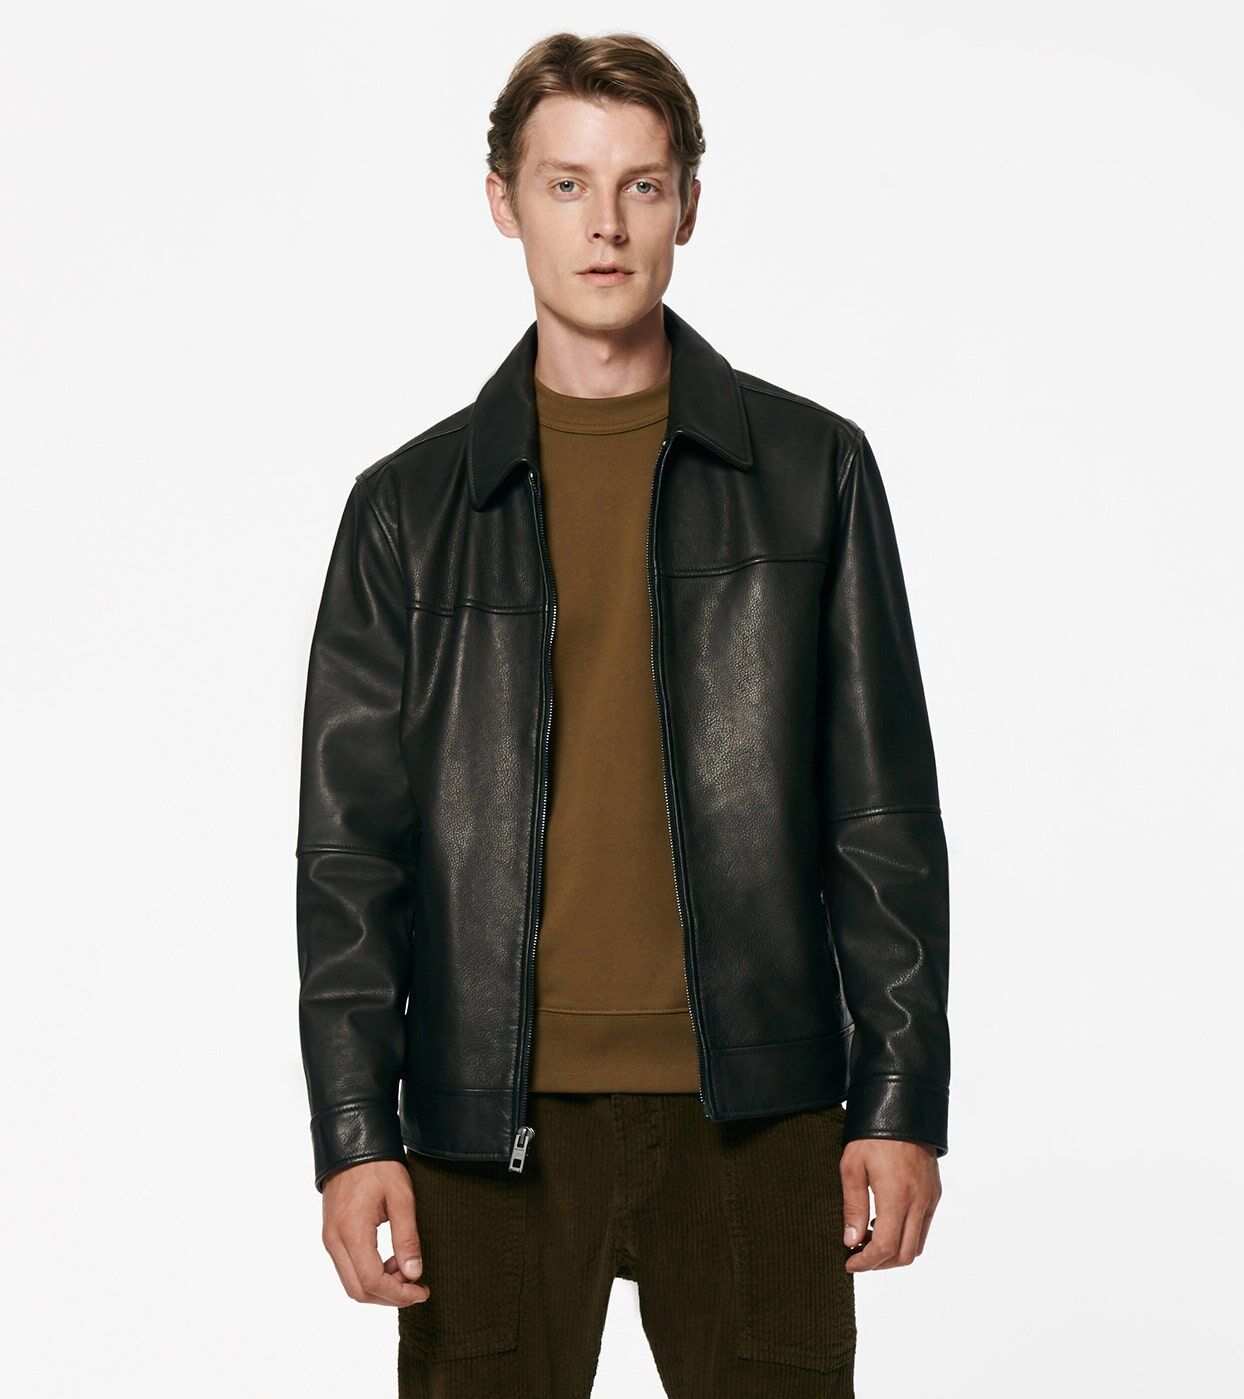 Wilsons Leather Andrew Marc   Men's Rockaway Shirt Collar Leather Jacket   Black   Large